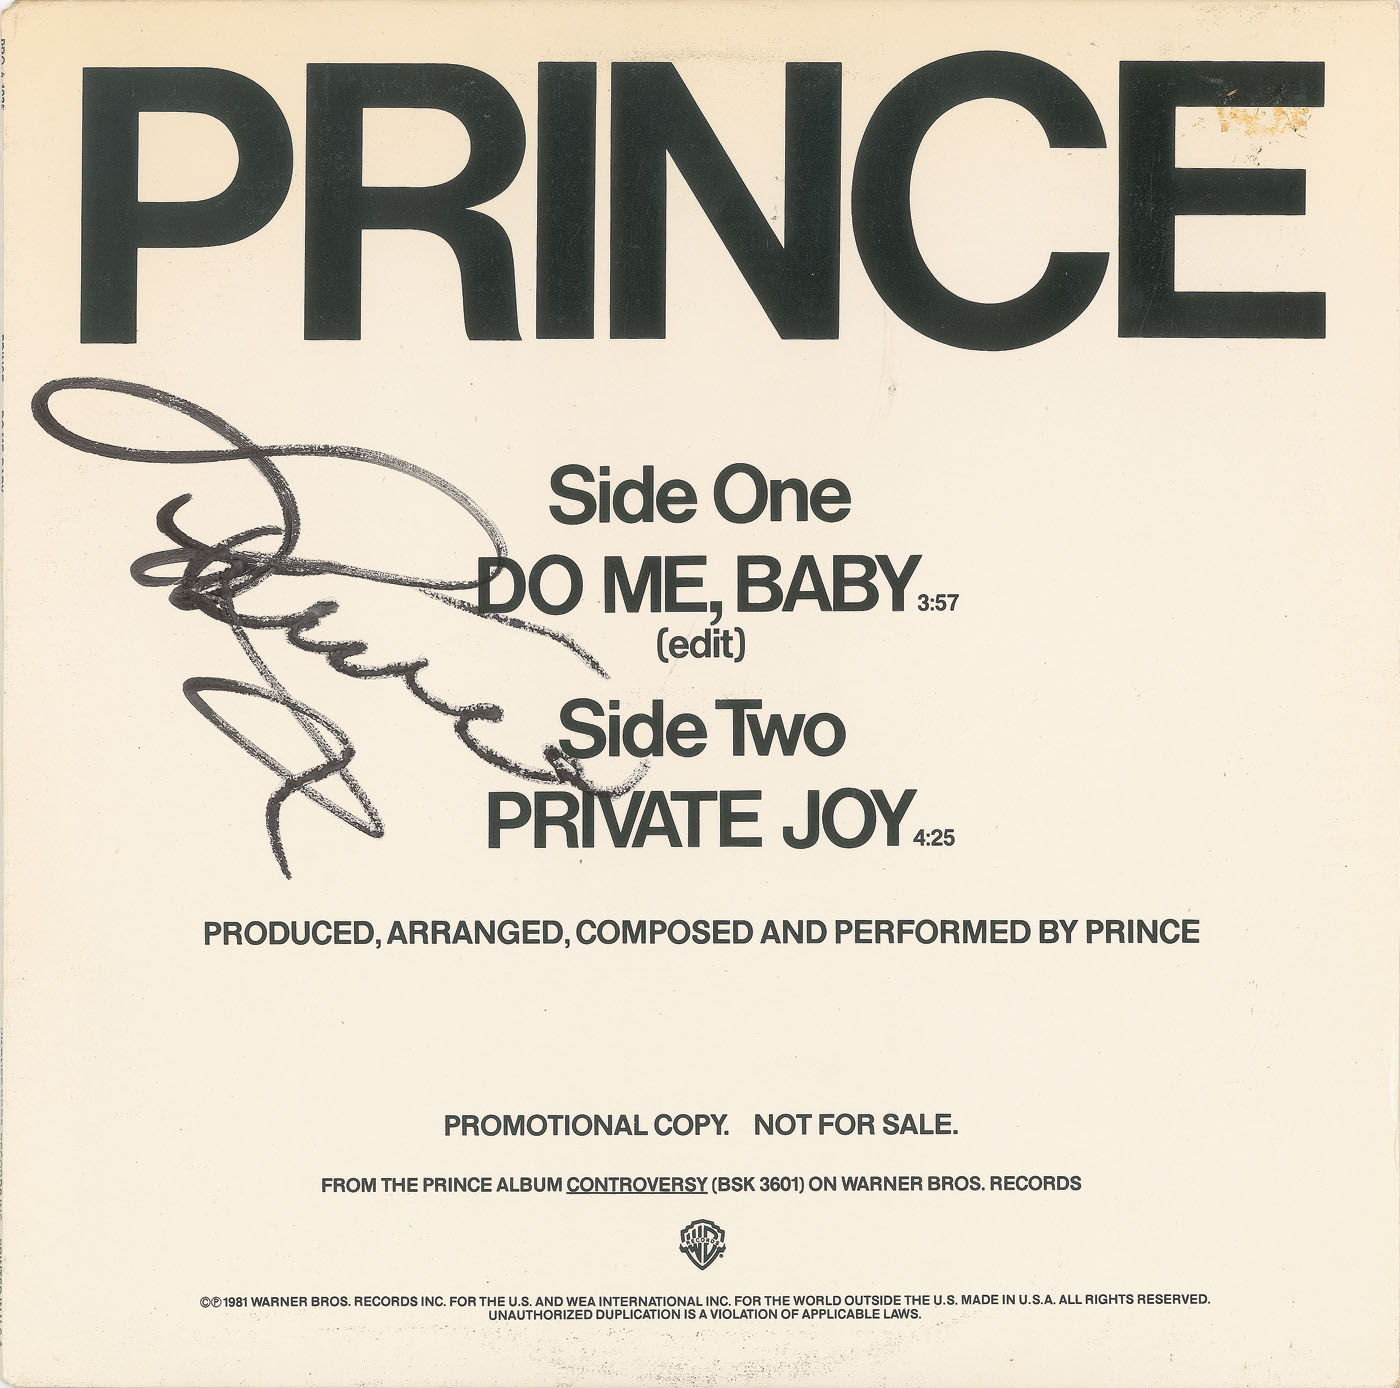 Autographed Prince promo album “Do Me, Baby / Private Joy" John Brennan Collection RR Auction